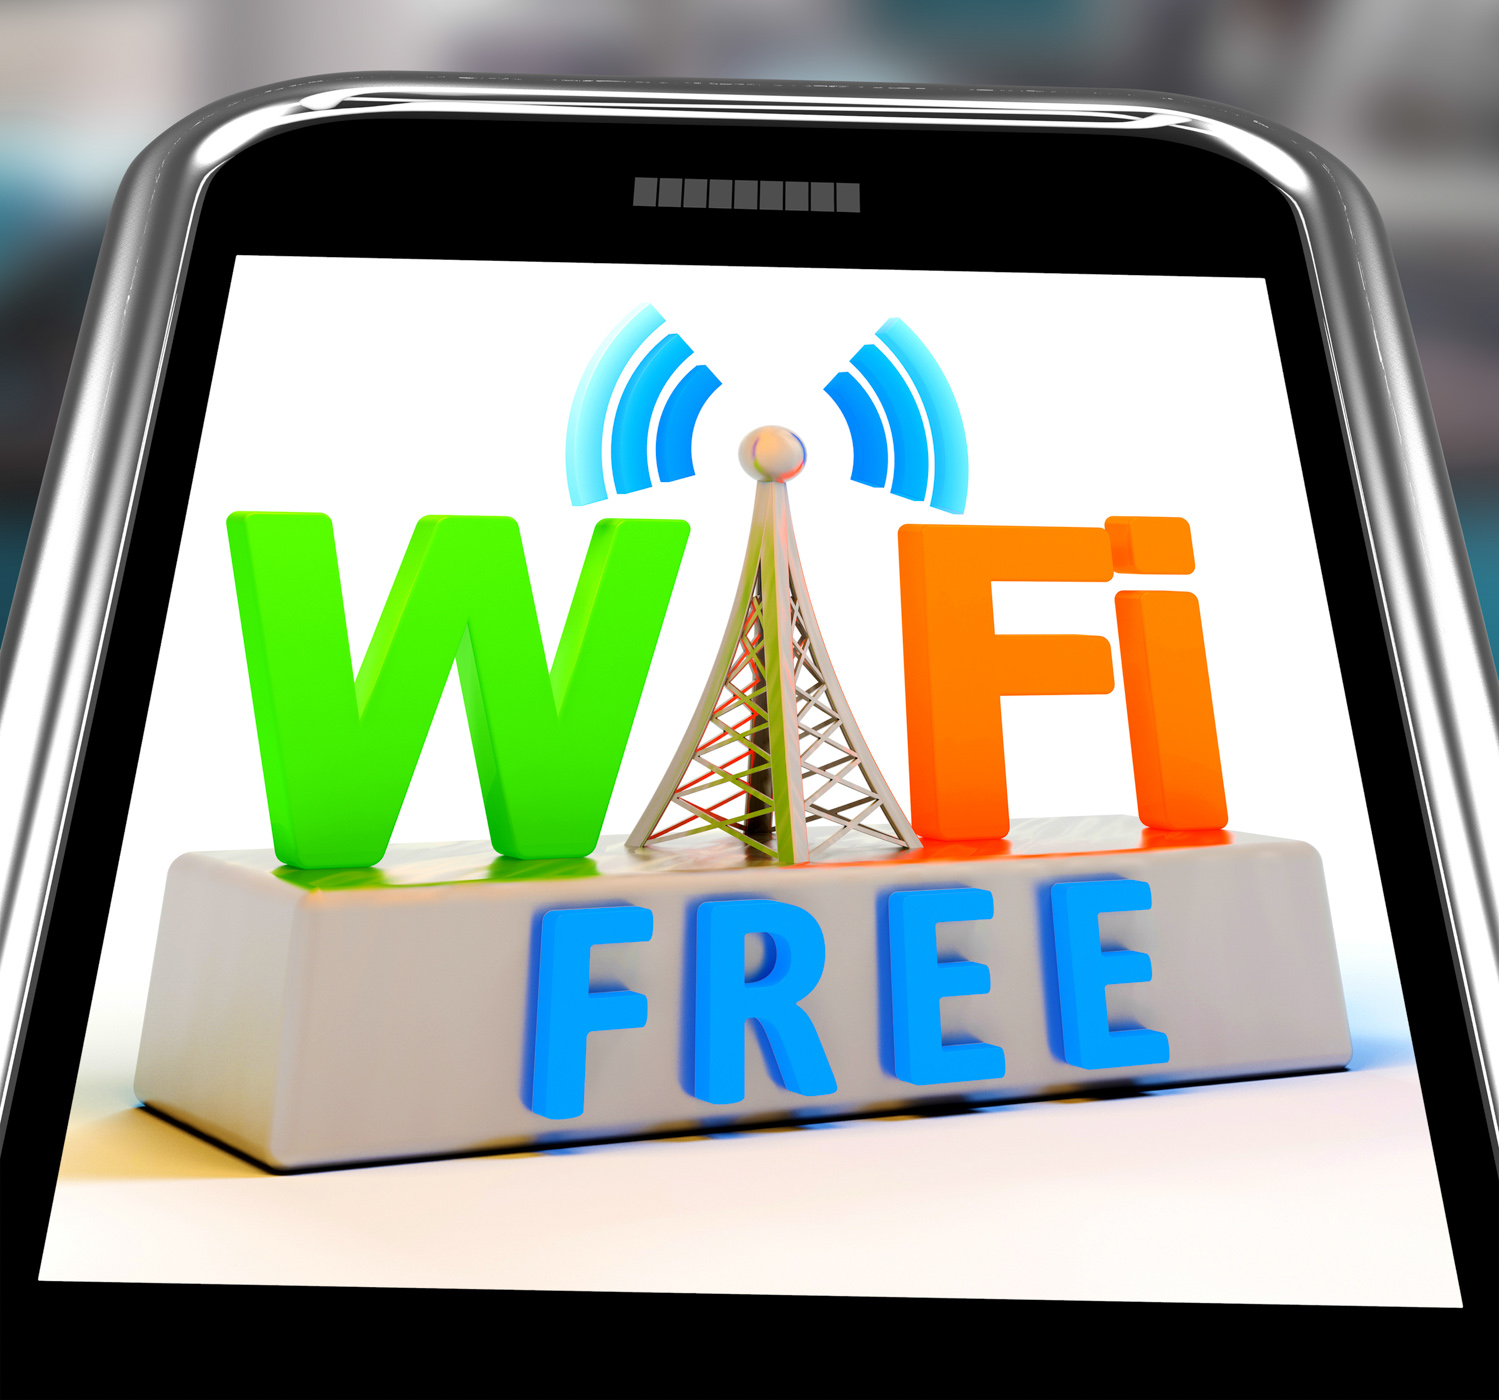 Wifi Free On Smartphone Showing WiFi Broadcasting Area, Receive, Wi-fi, Web, Transmitter, HQ Photo